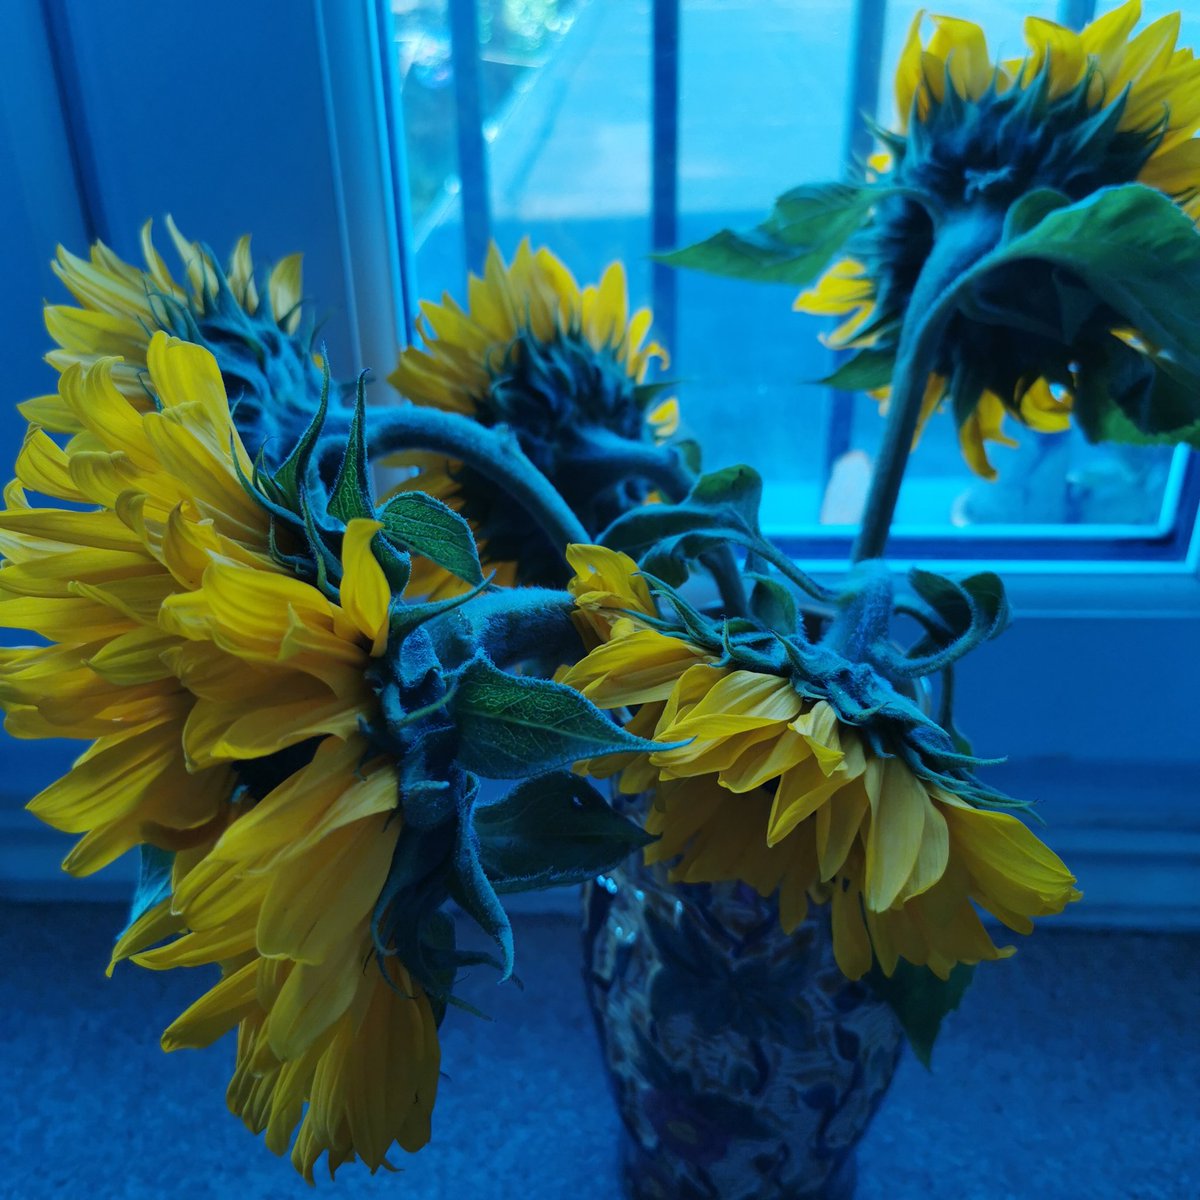 Allure of blue
Van Gogh for  Picasso 
Survival phasing
Yellow sunflowers splash colour
Heavy heads in obeisance.
Su_San 
#vss365 #allure
#rise365 #survival
#vssdaily #yellow
#NaTankaMo #blue
#TankaThursday
#Tanka
#MayTanka